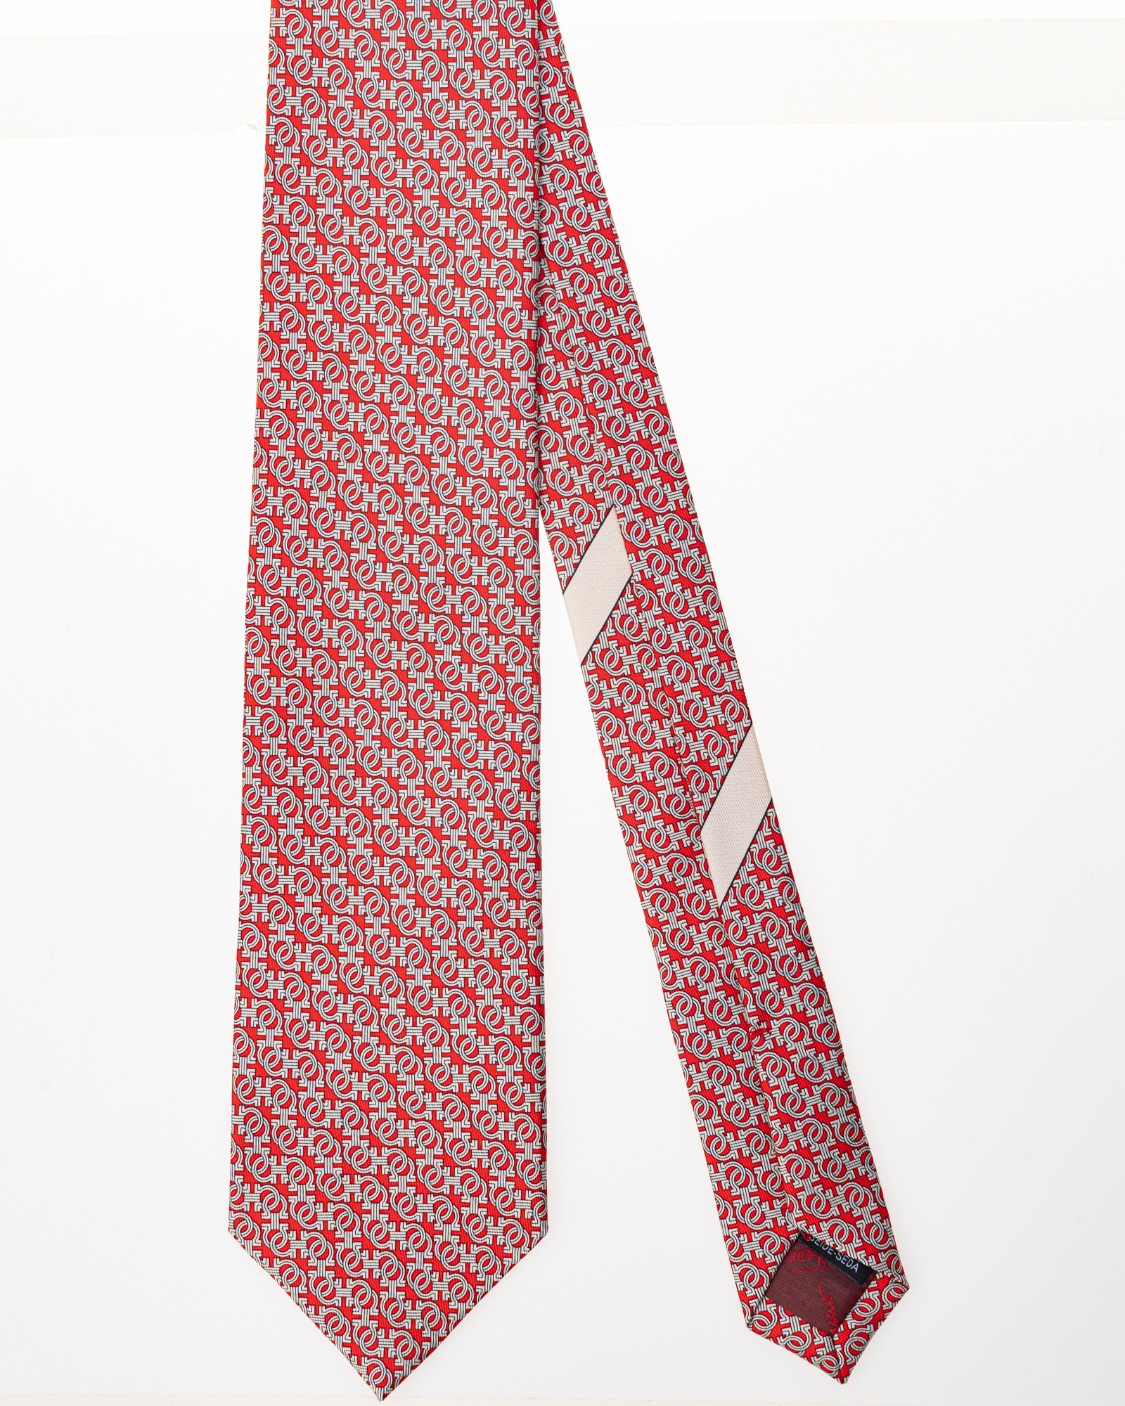 shop SALVATORE FERRAGAMO  Cravatta: Salvatore Ferragamo cravatta in jacquard di seta.
Decorata da un pattern di mini loghi intrecciati.
Fondo a 7 cm.
Composizione: 100% seta.
Made in Italy.. 350493 4 OSCAR-005 749806 number 7726813